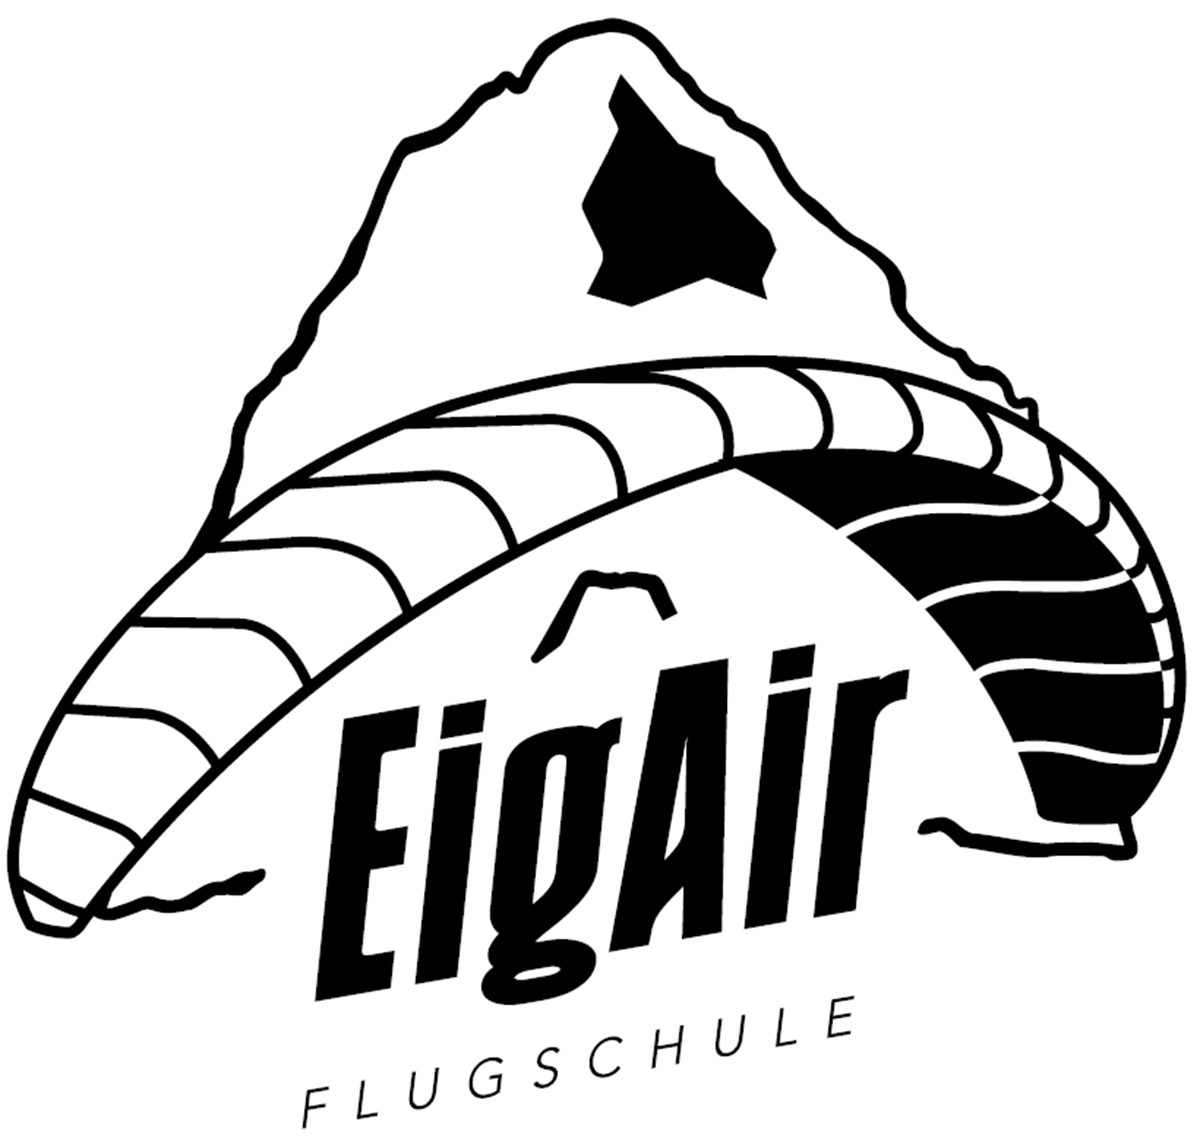 EigAir Flugschule